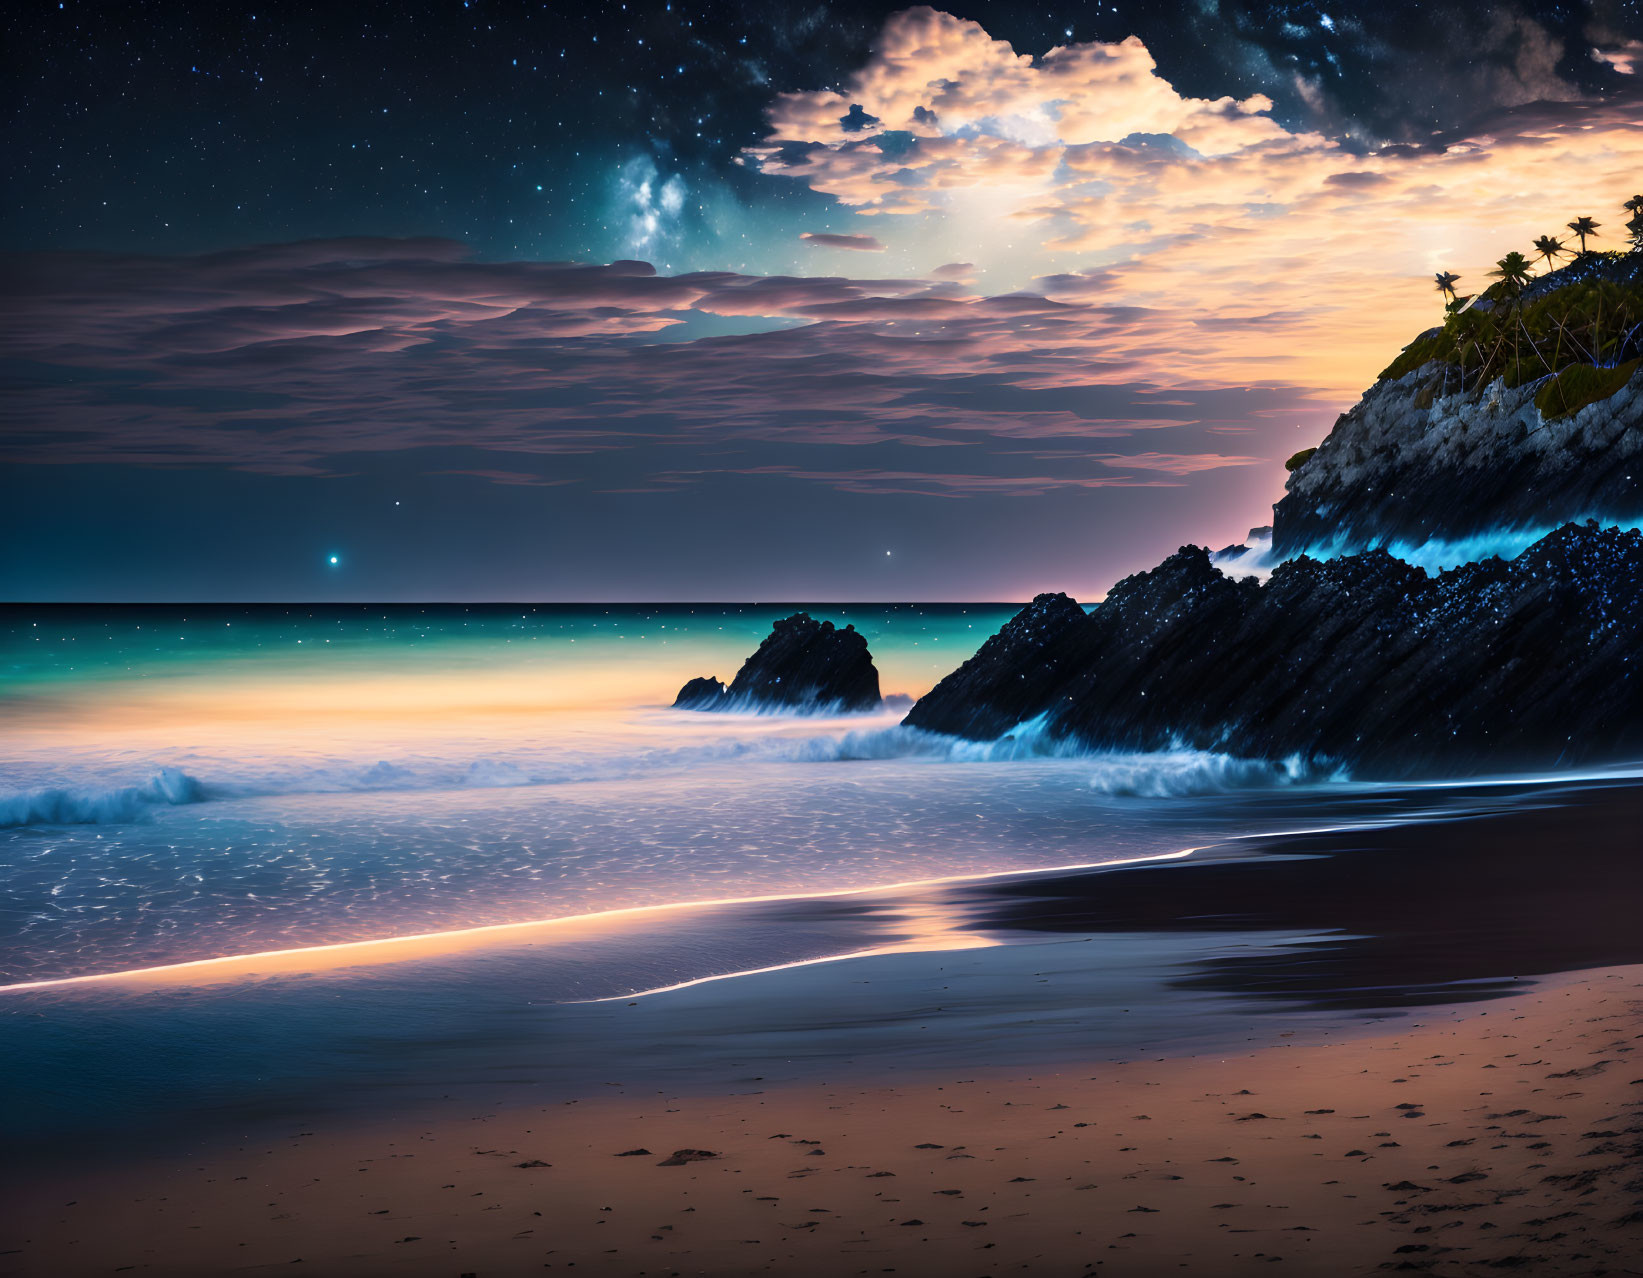 Bioluminescent waves and stars illuminate night beach with palm trees